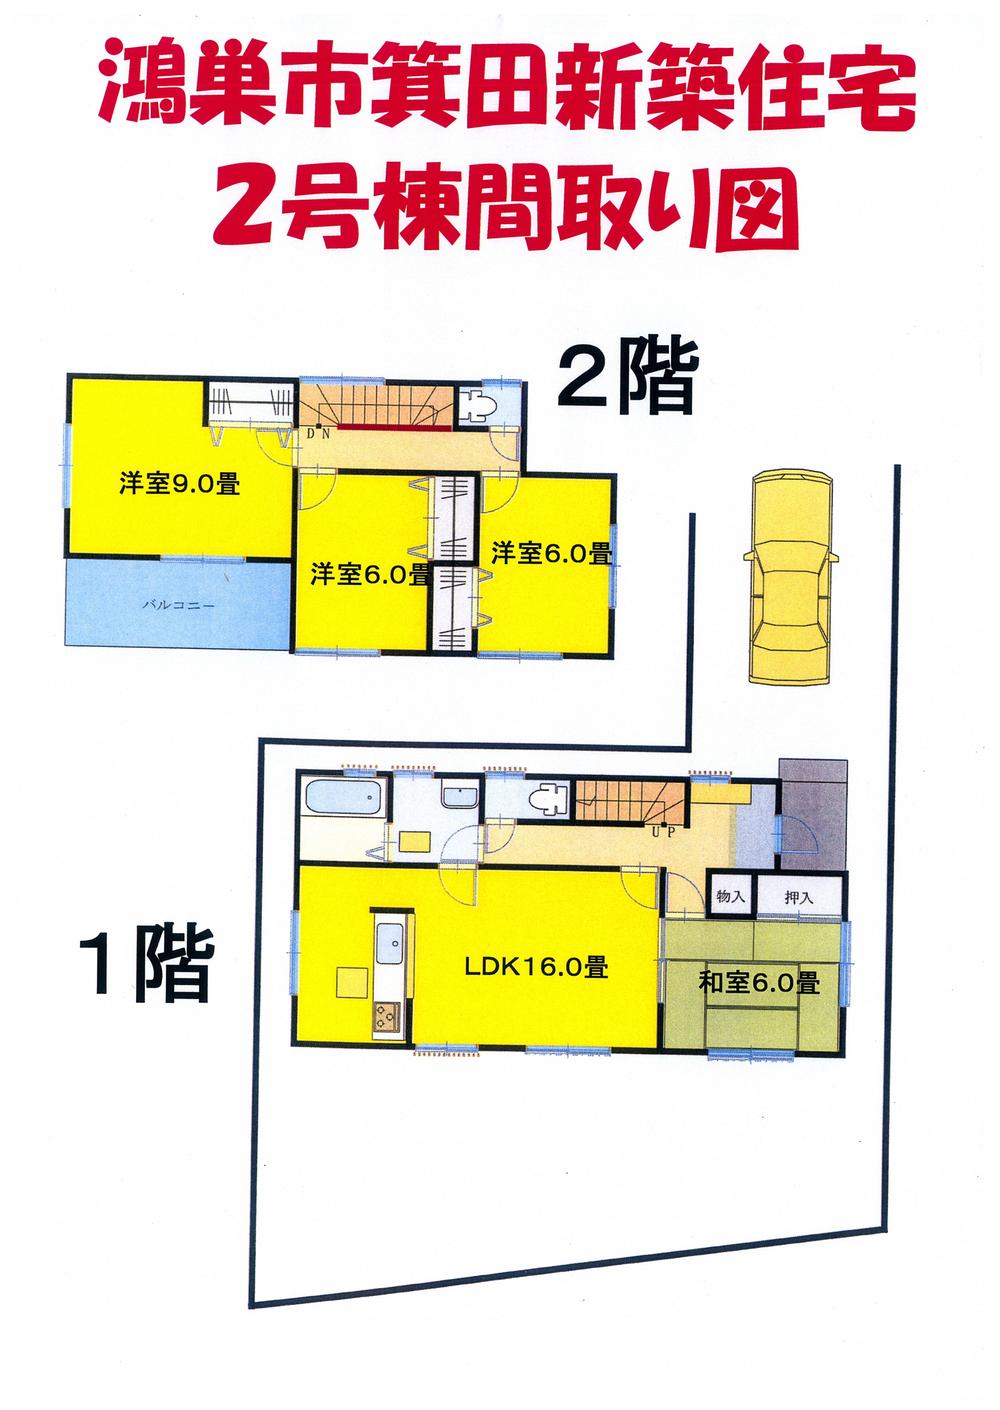 Floor plan. 21,800,000 yen, 4LDK, Land area 201.5 sq m , Building area 105.15 sq m